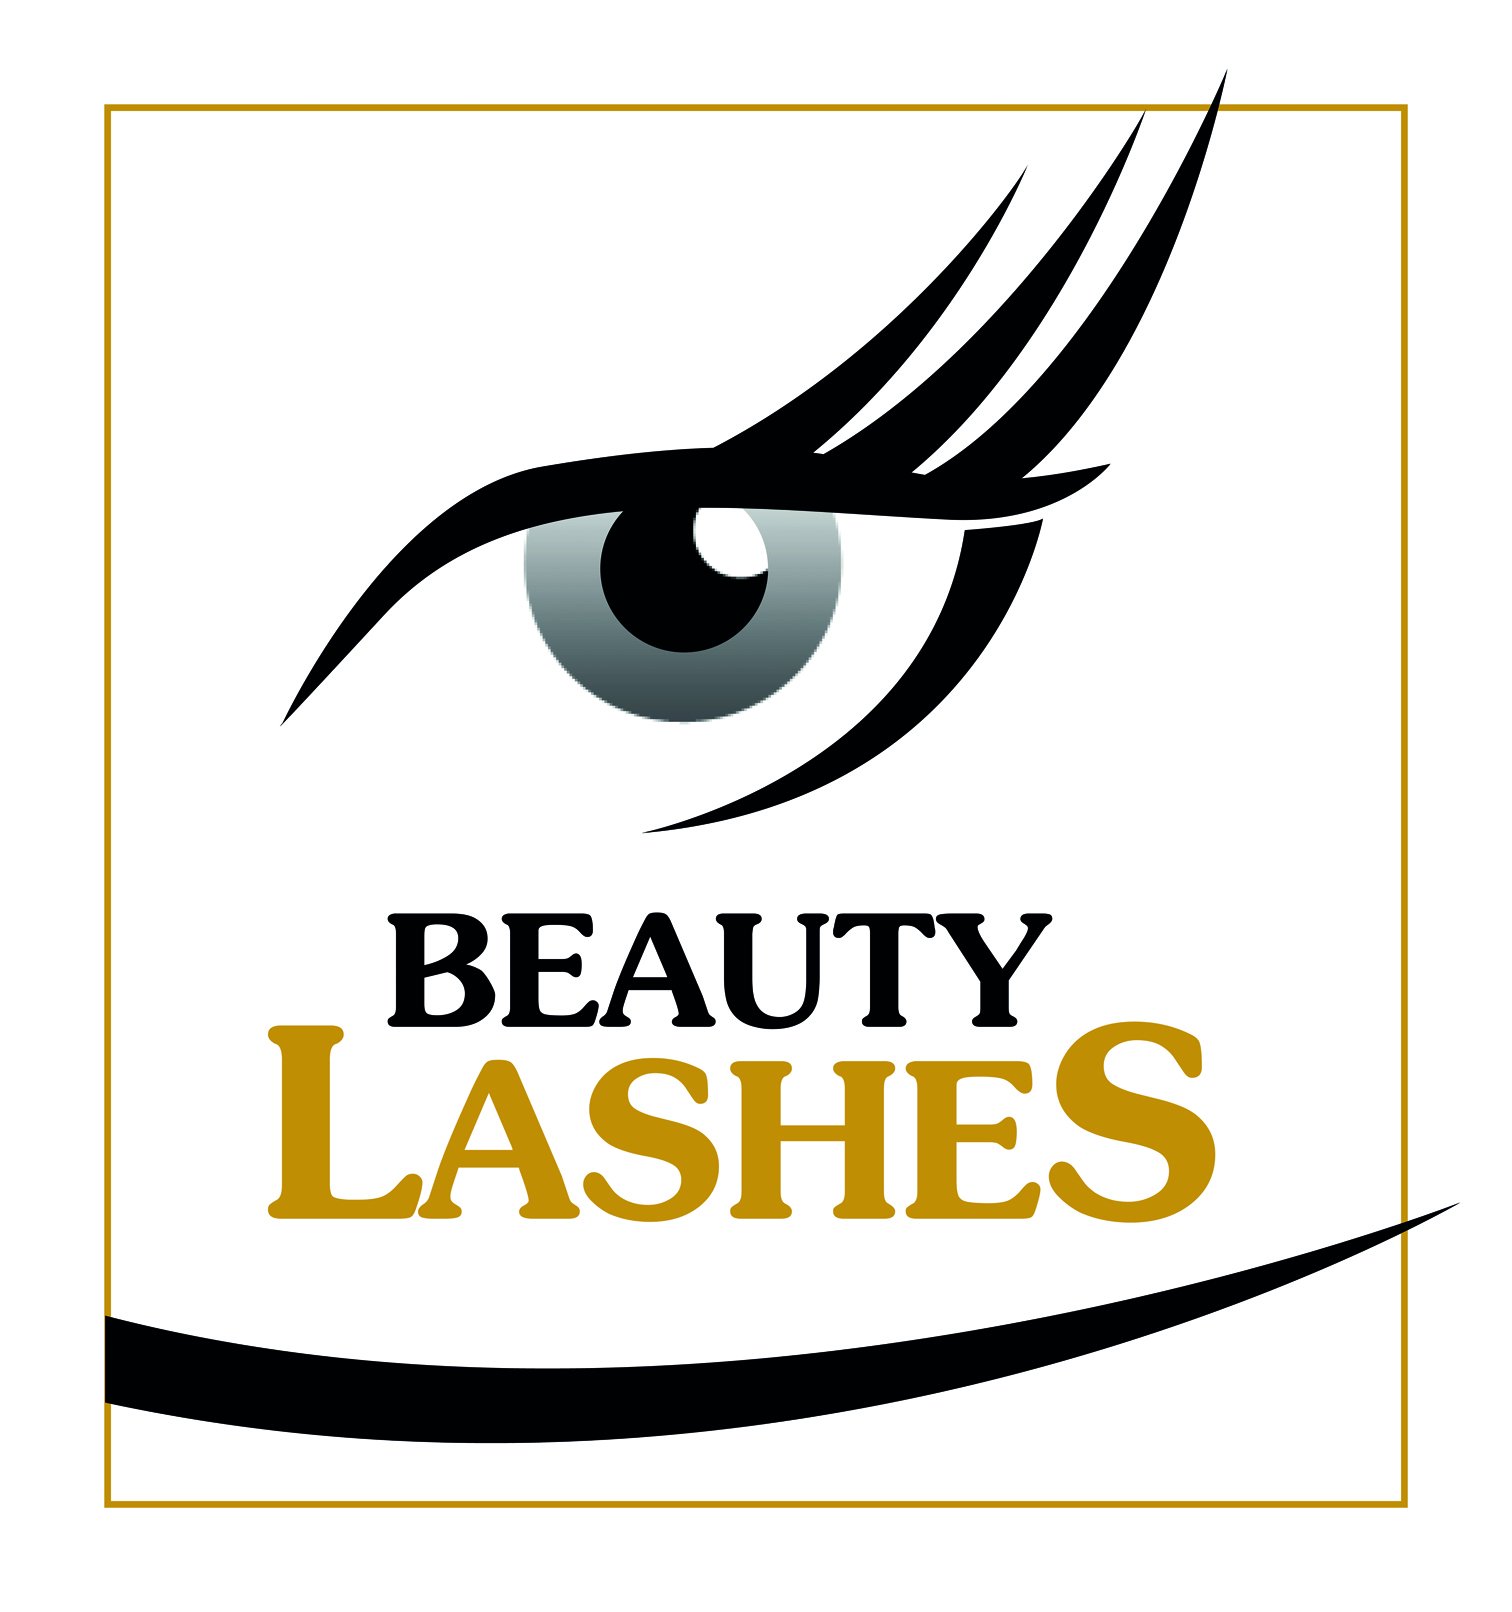 (c) Beauty-lashes.net